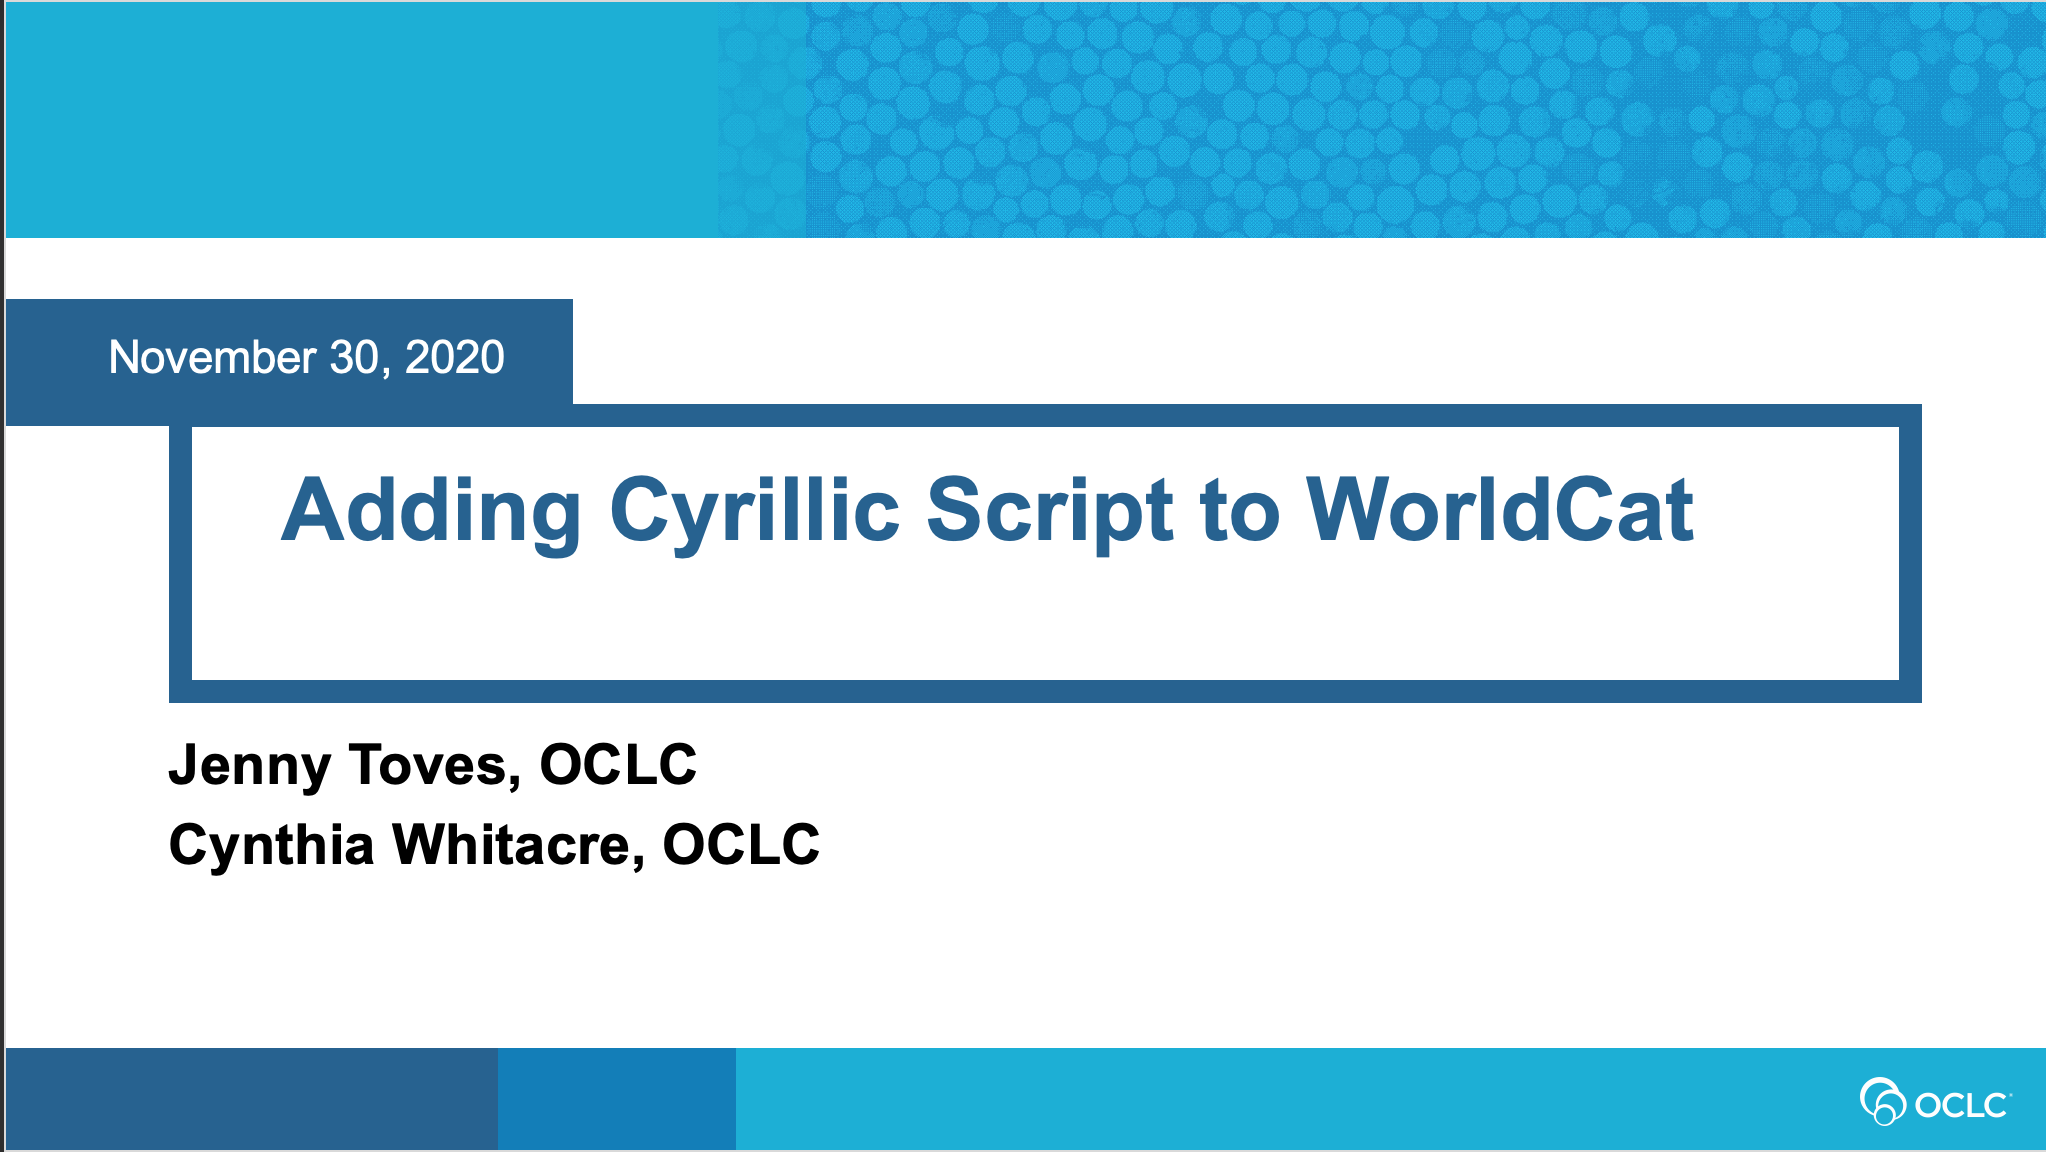 Adding Cyrillic Script to WorldCat